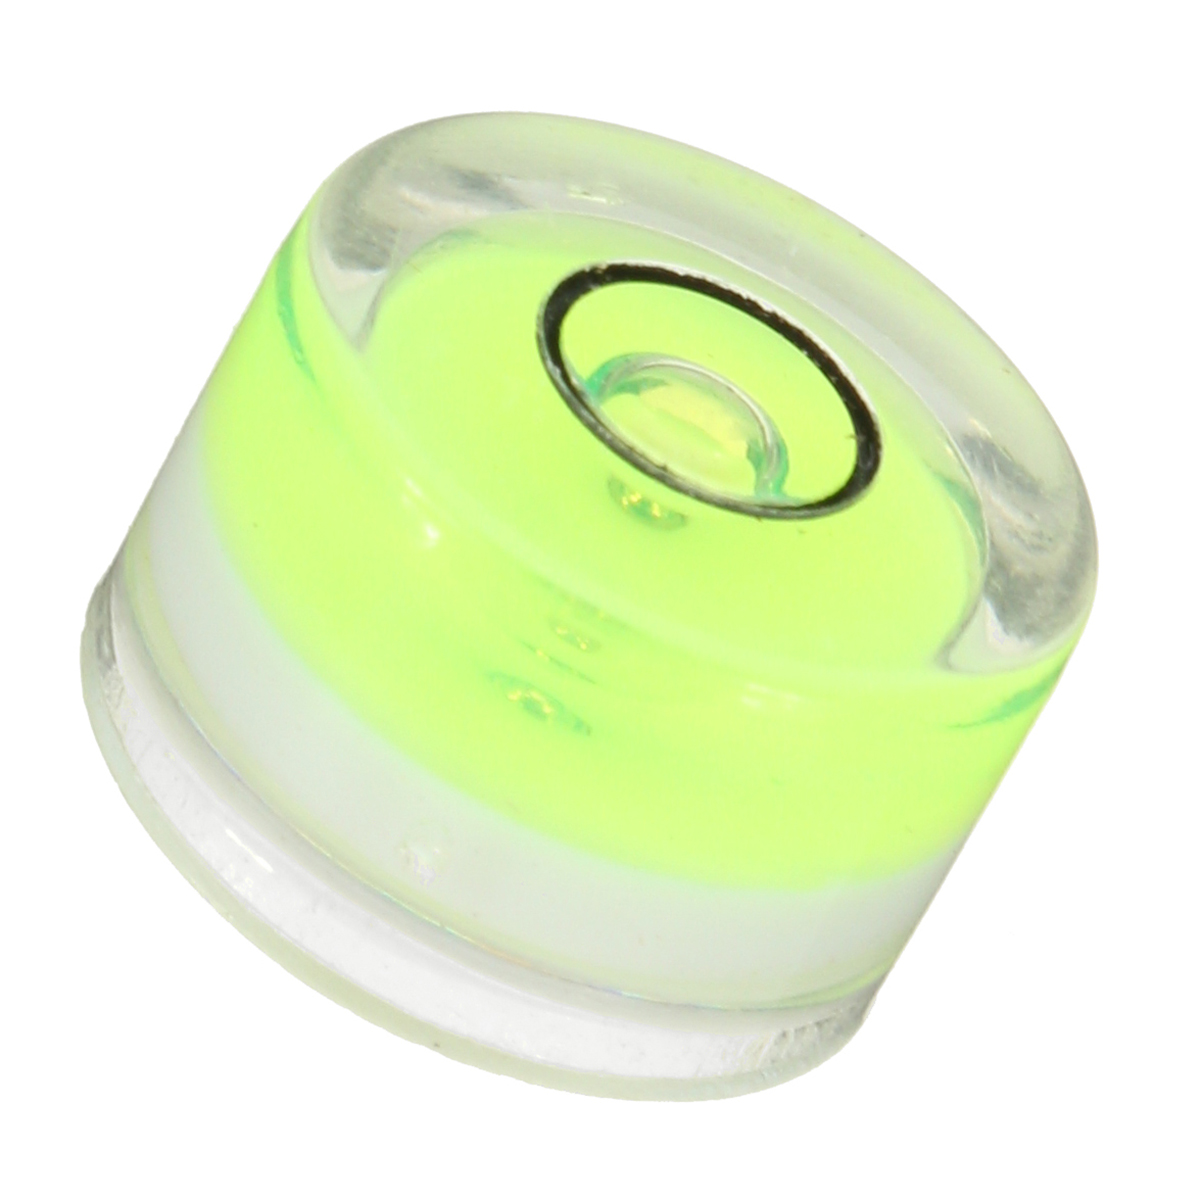 12x7mm-Tiny-Disc-Bubble-Spirit-Level-Round-Circle-Circular-Green-Tripod-1318440-1